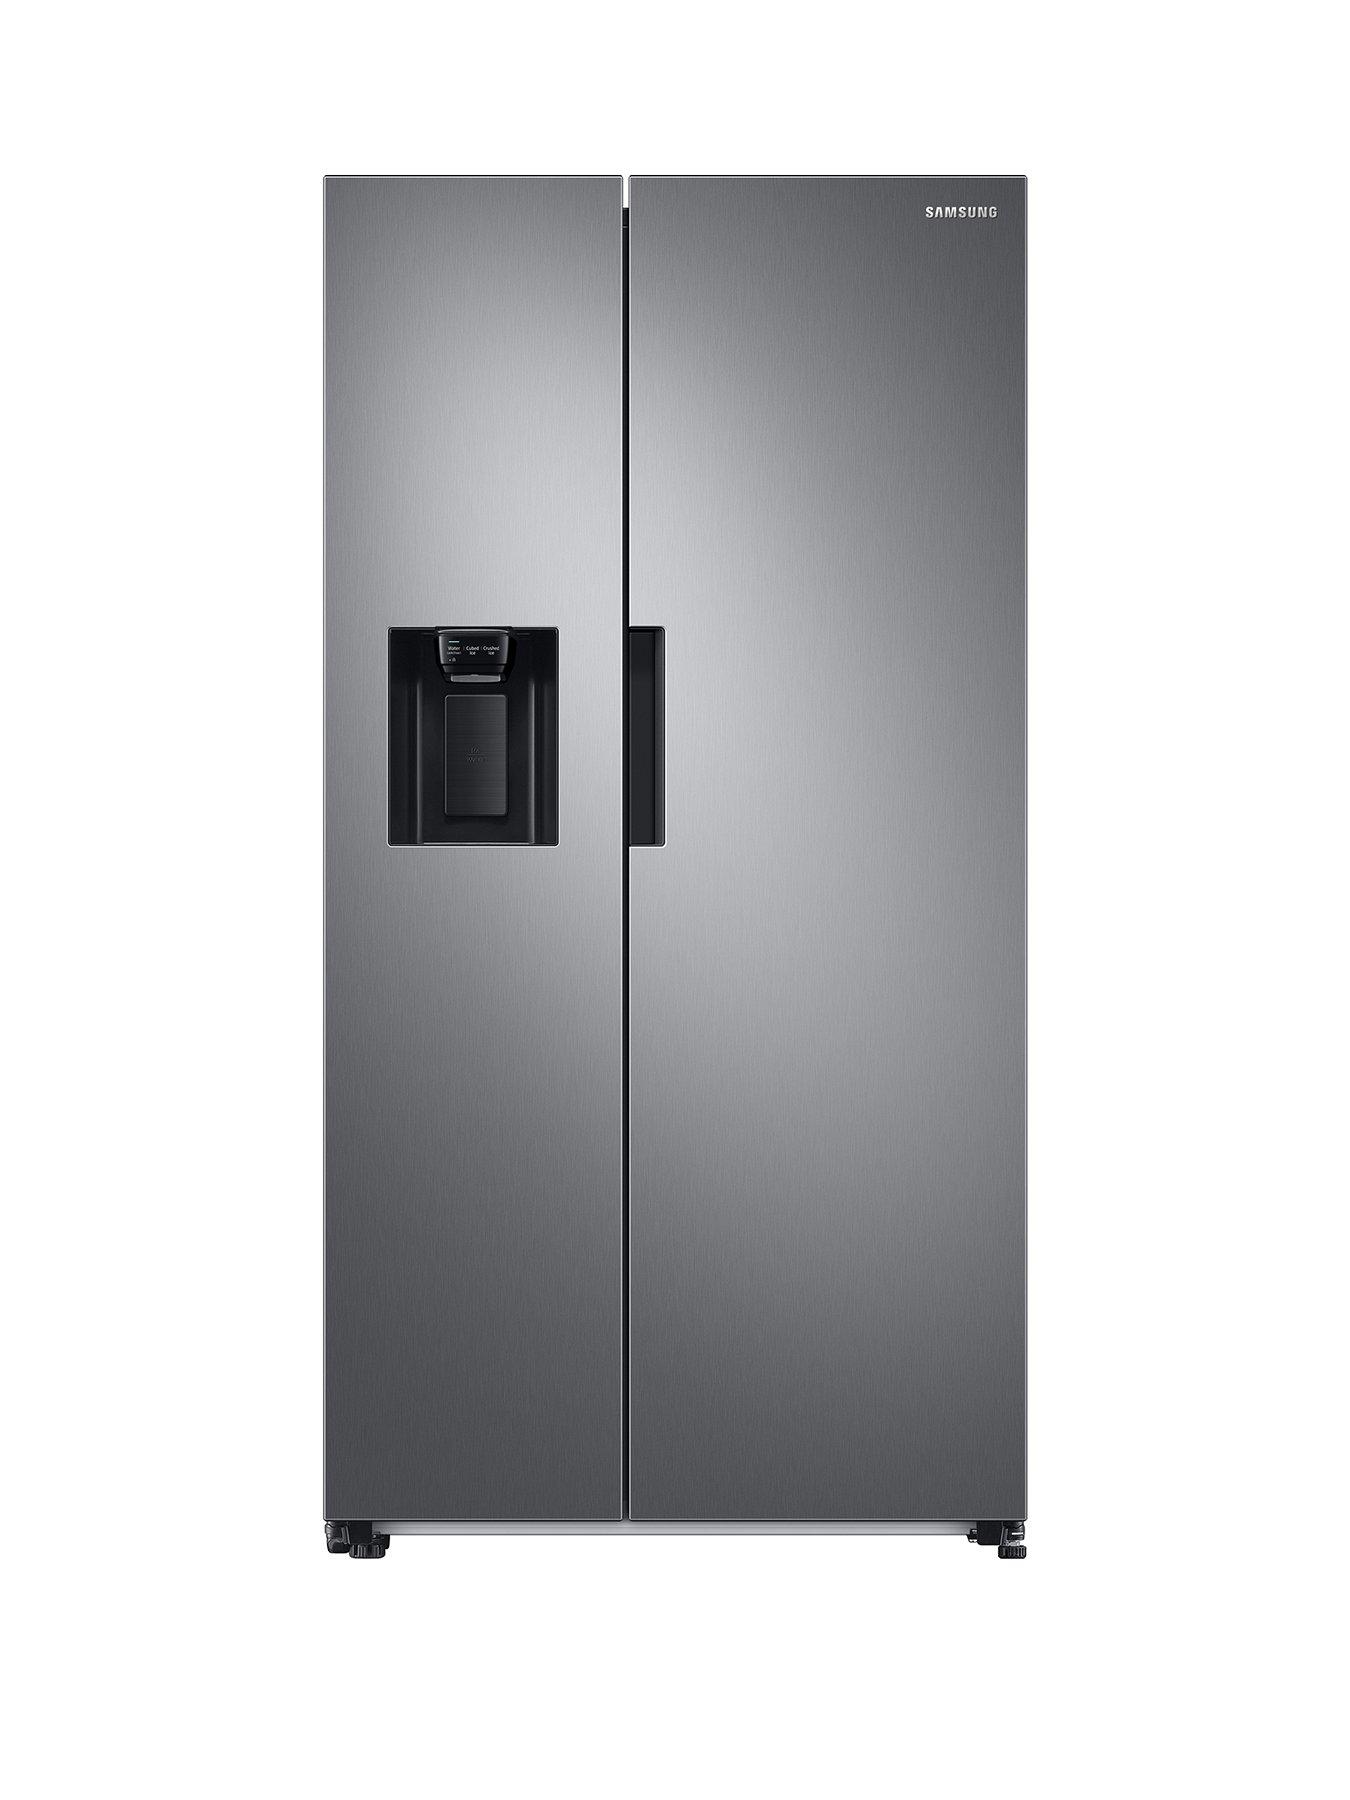 85 to 90cm, American style fridge freezers, Fridges & freezers, Electricals